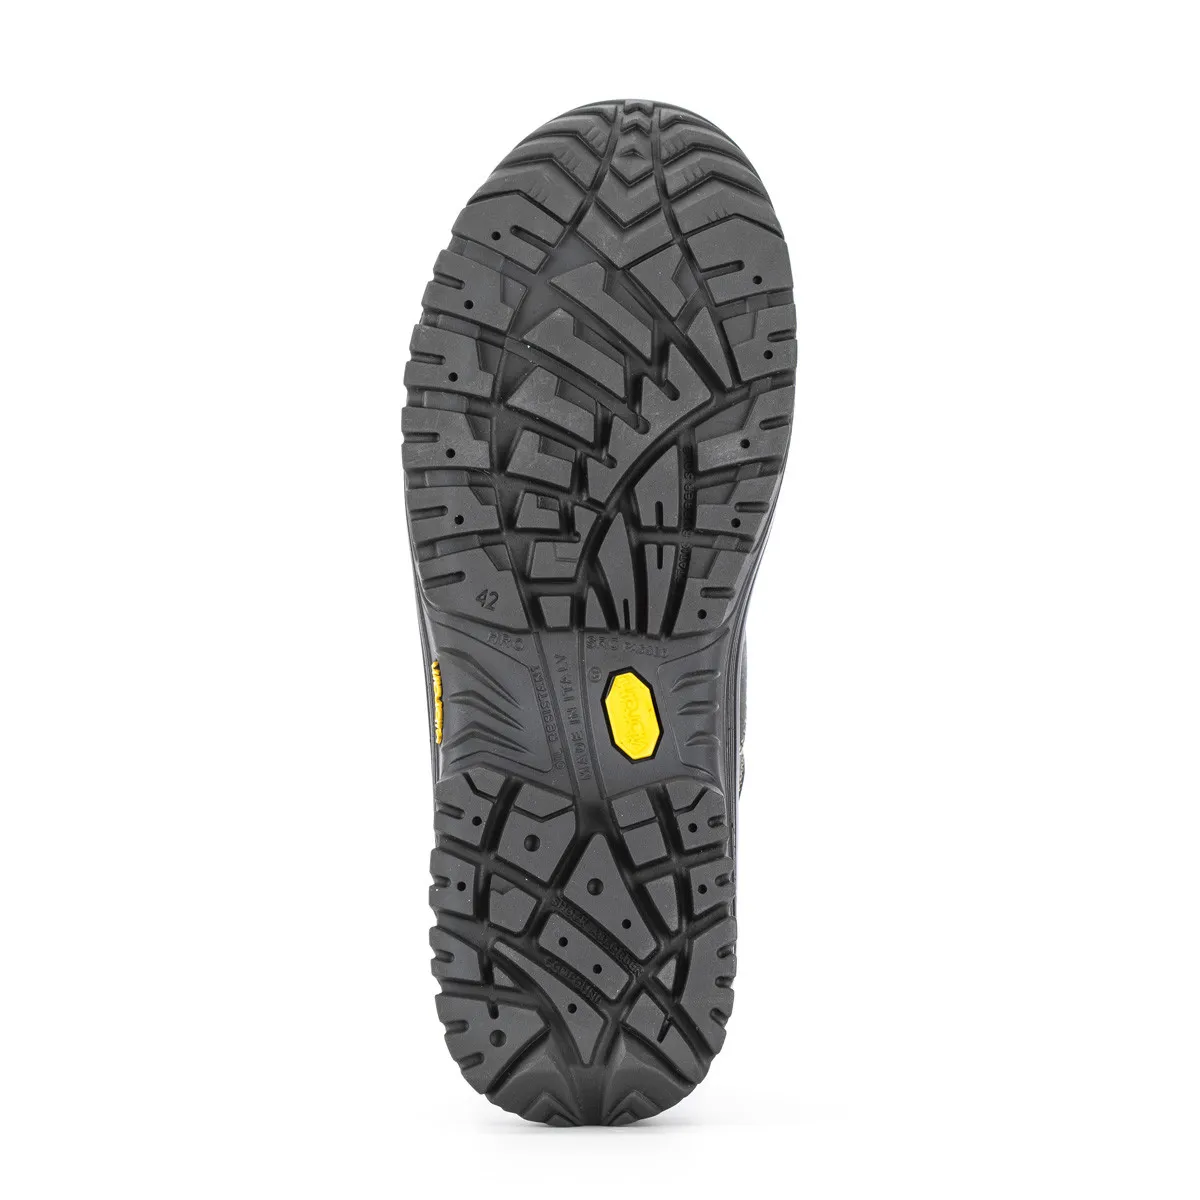 Zaštitne cipele duboke WELD S3 - Sixton 